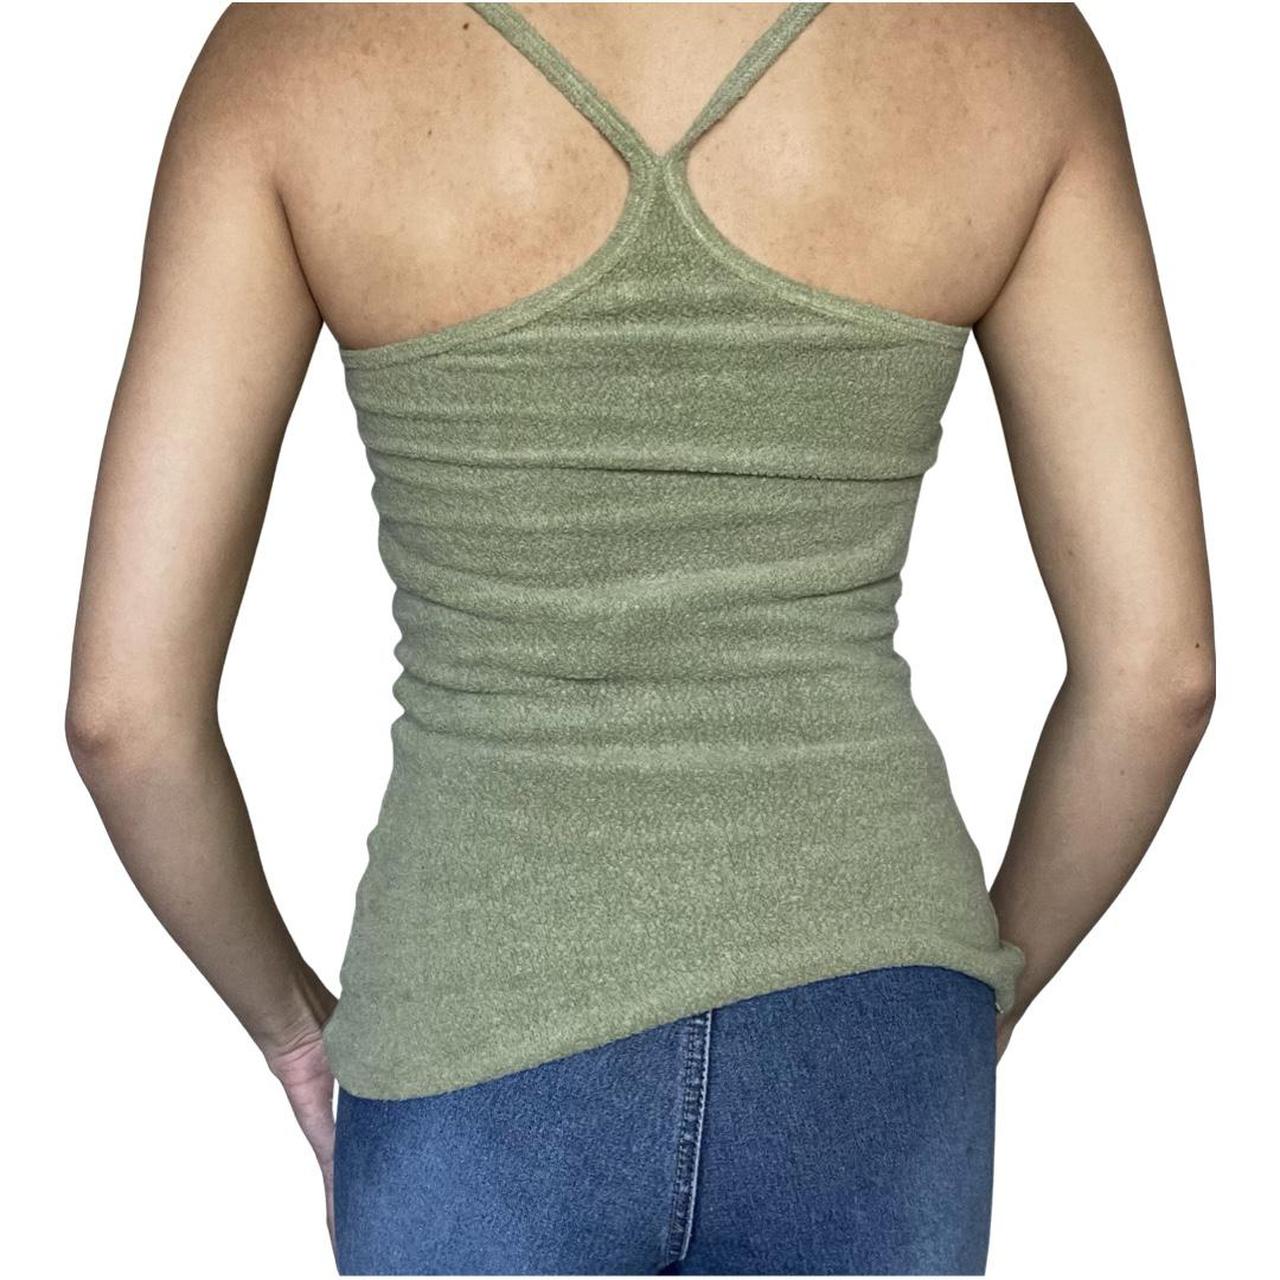 Women's Khaki Vests-tanks-camis (3)